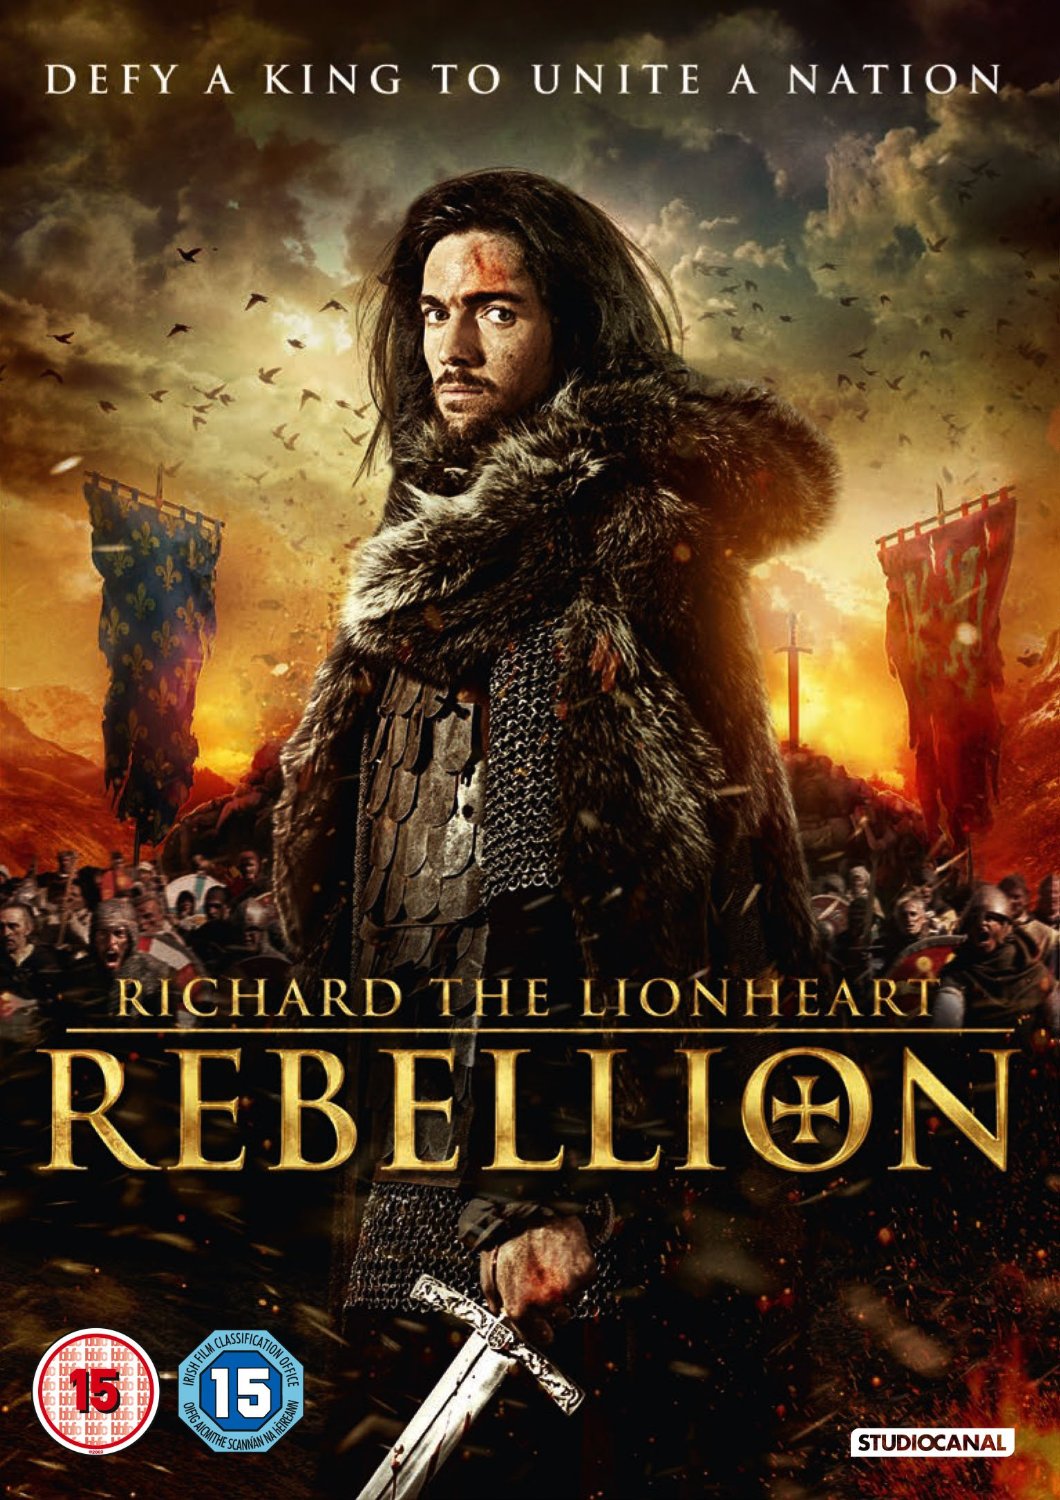 Richard the Lionheart: Rebellion 2015